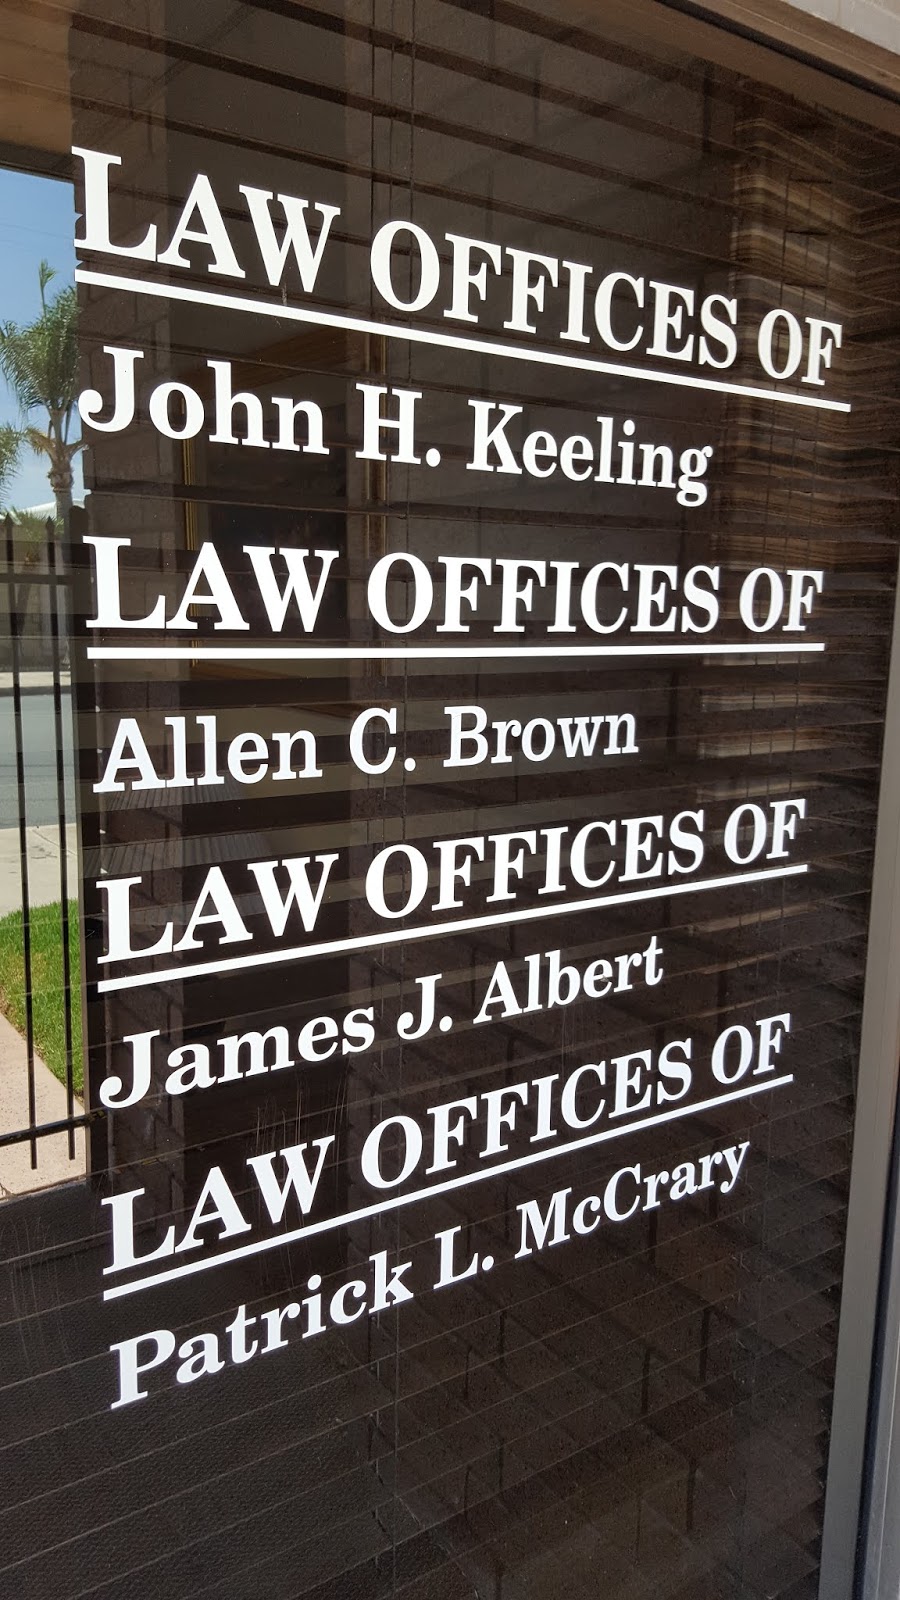 Law Office of Patrick L. McCrary | 222 W Madison Ave, El Cajon, CA 92020, USA | Phone: (619) 589-8533